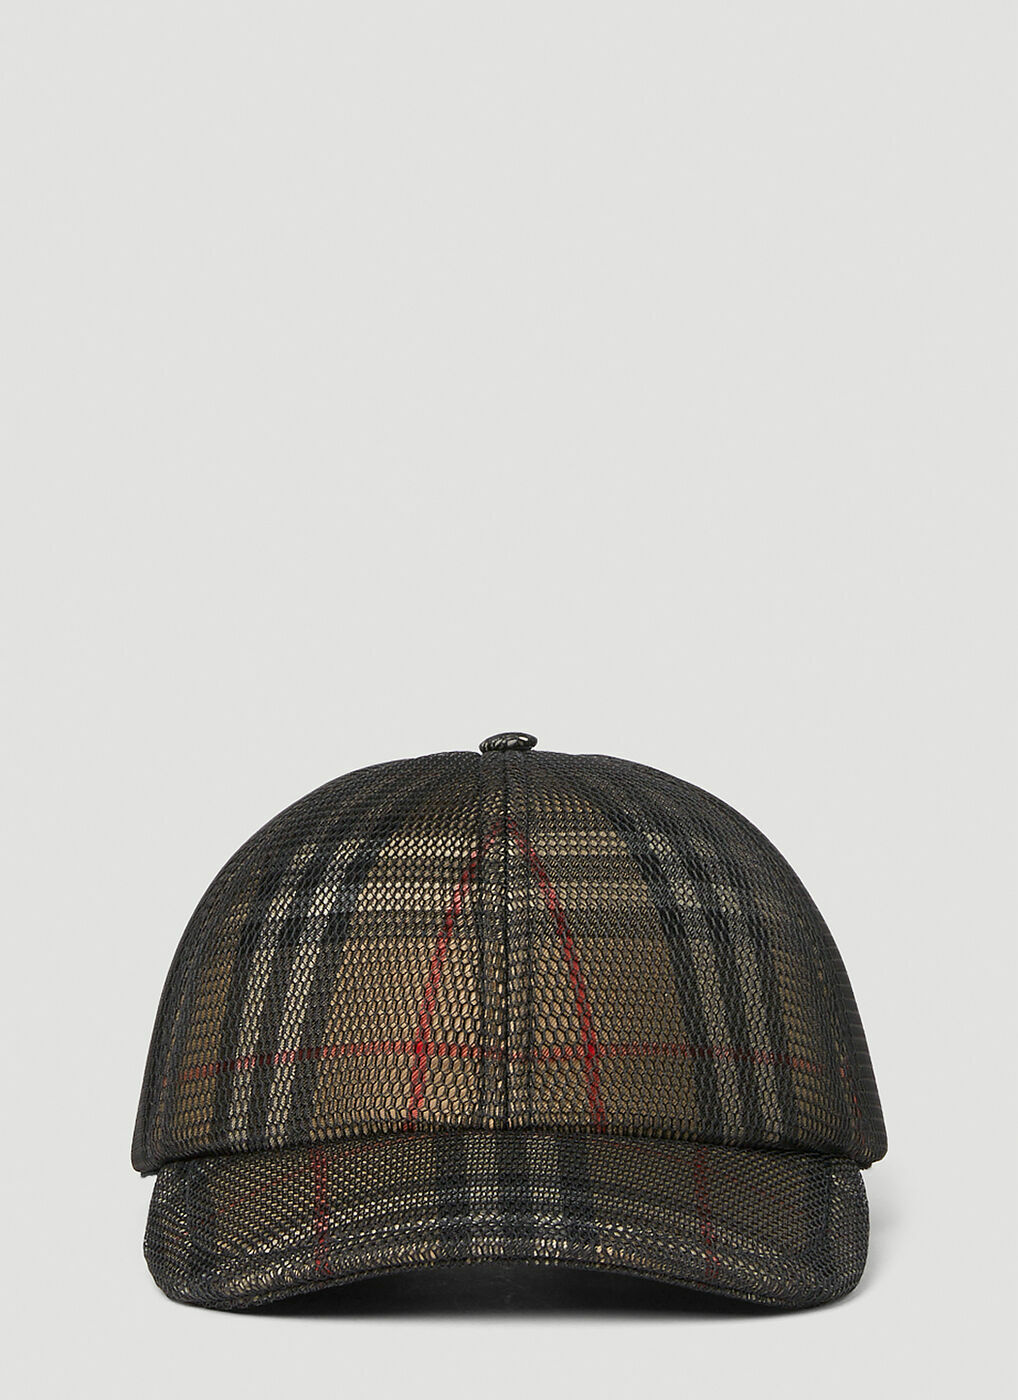 Burberry - Mesh Check Baseball Hat in Beige Burberry